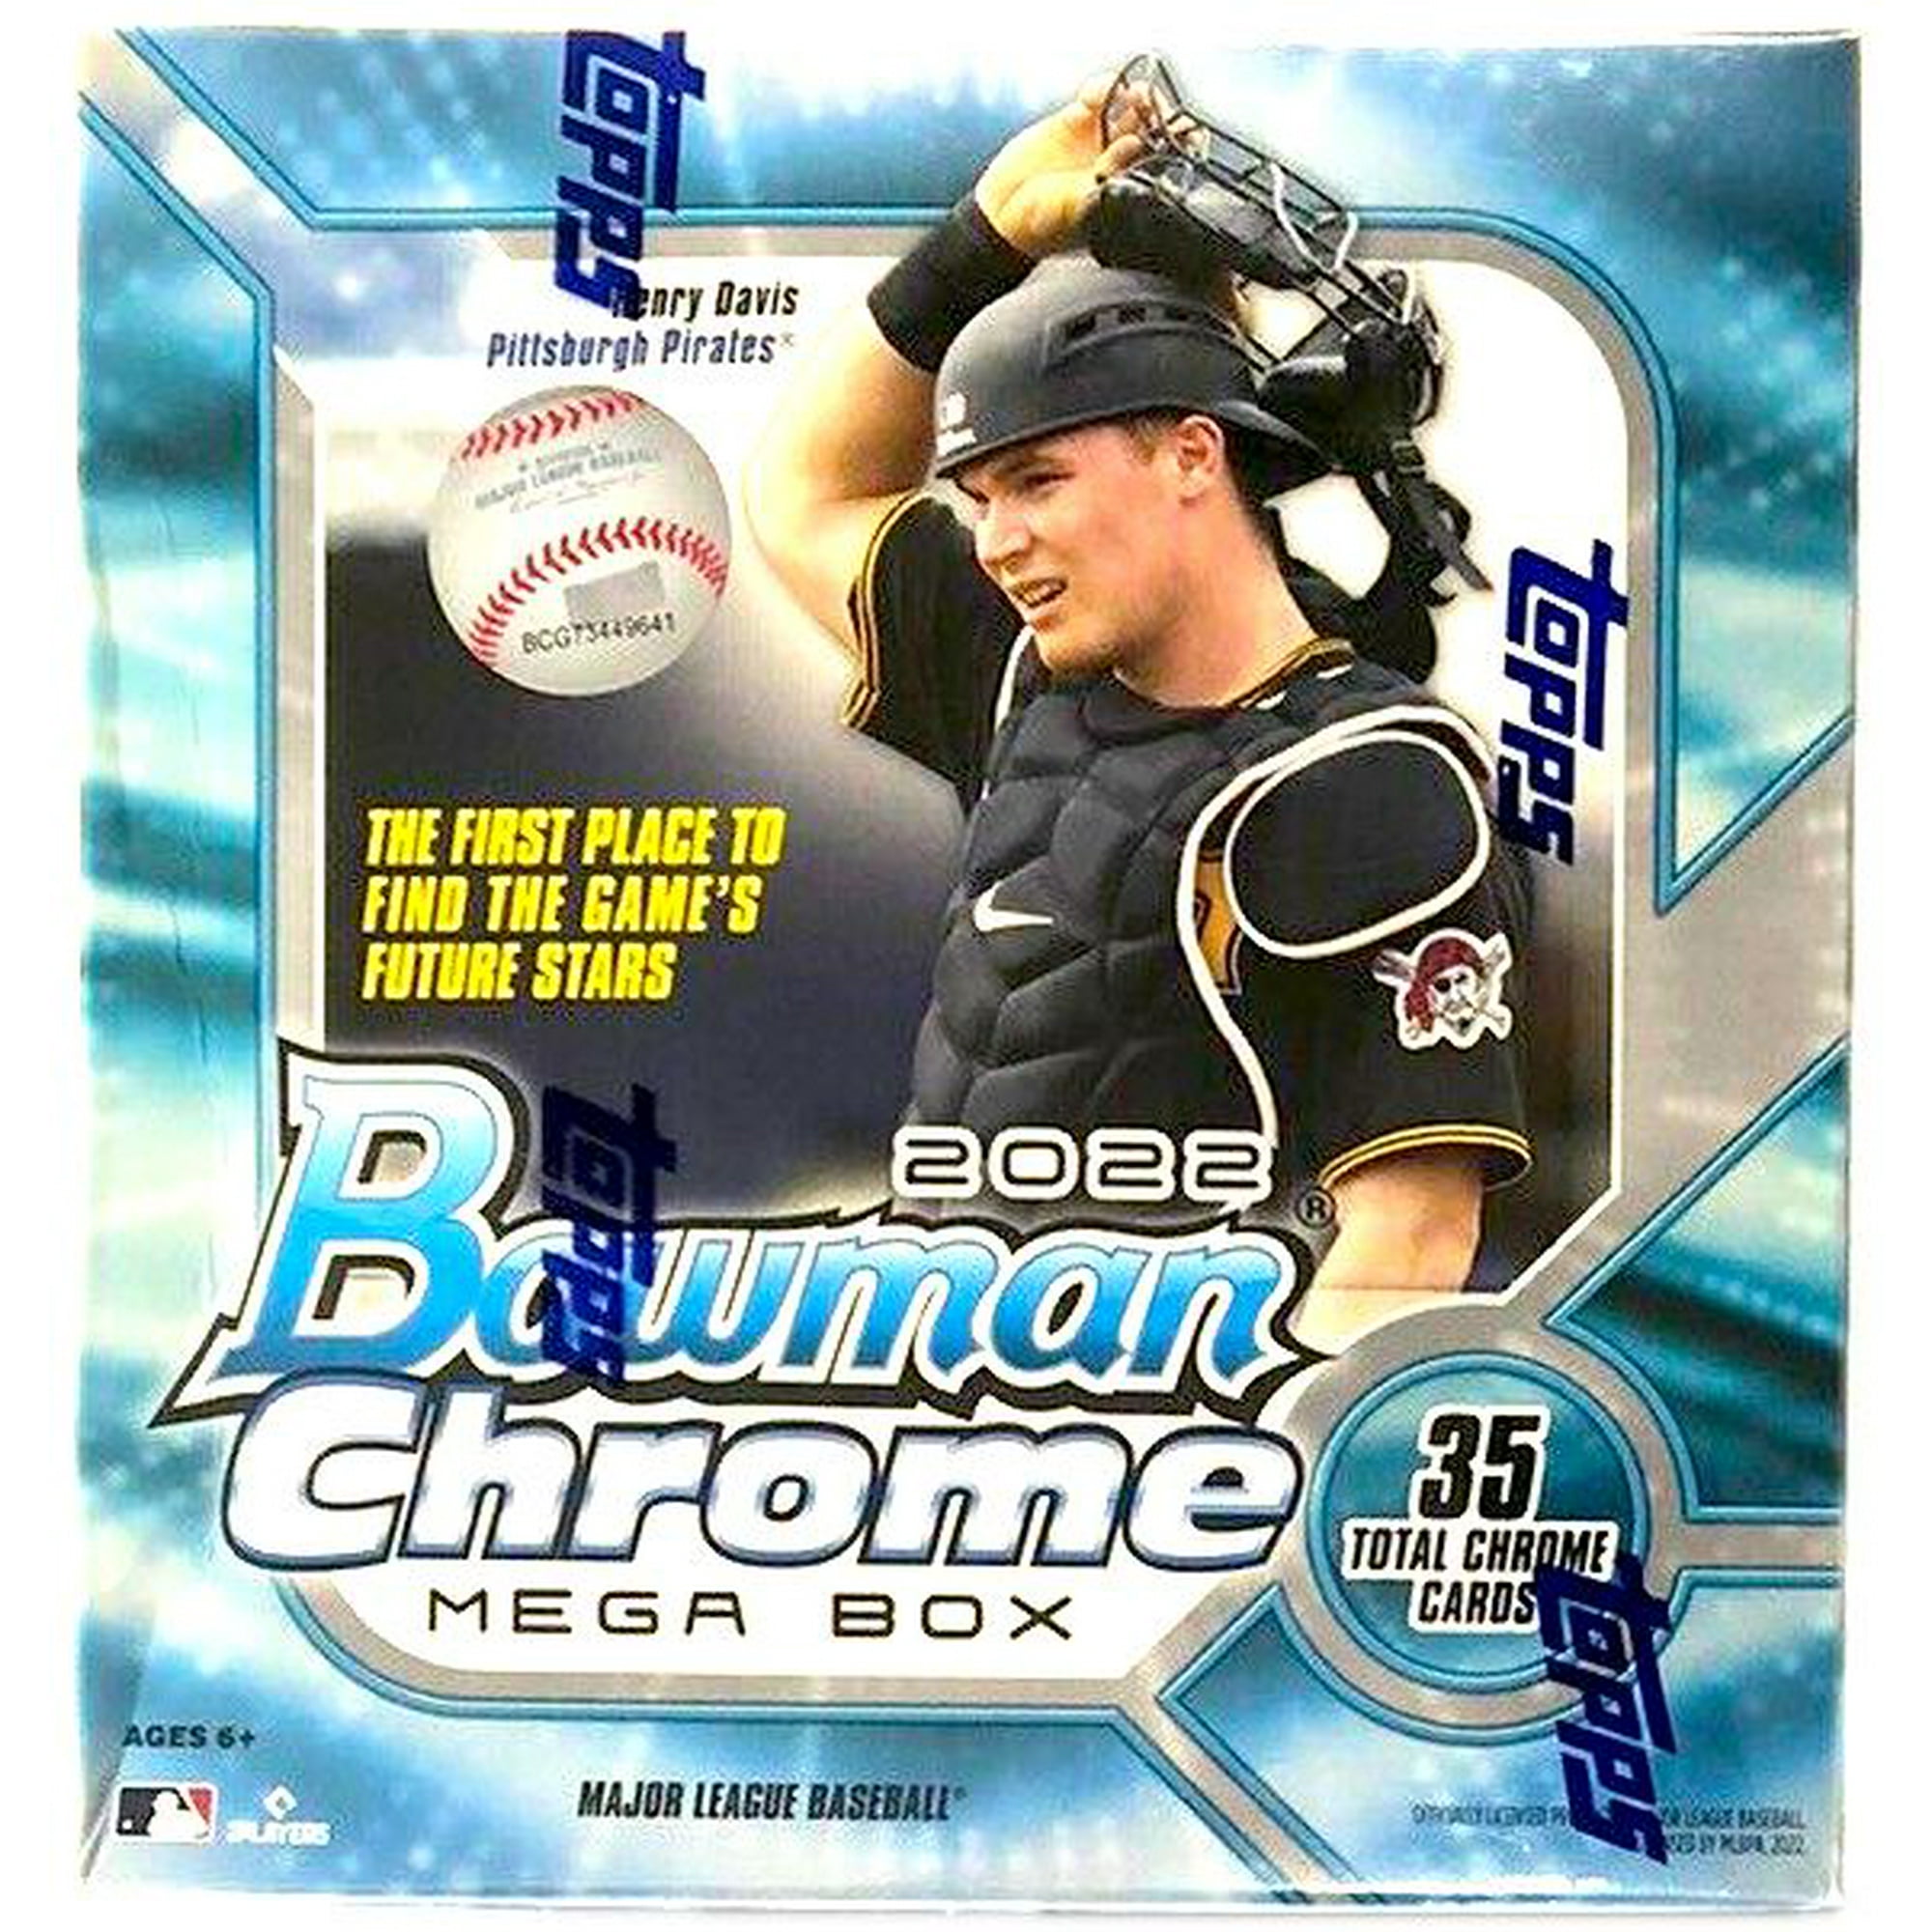 2022 Topps Bowman Chrome Baseball Mega Box 